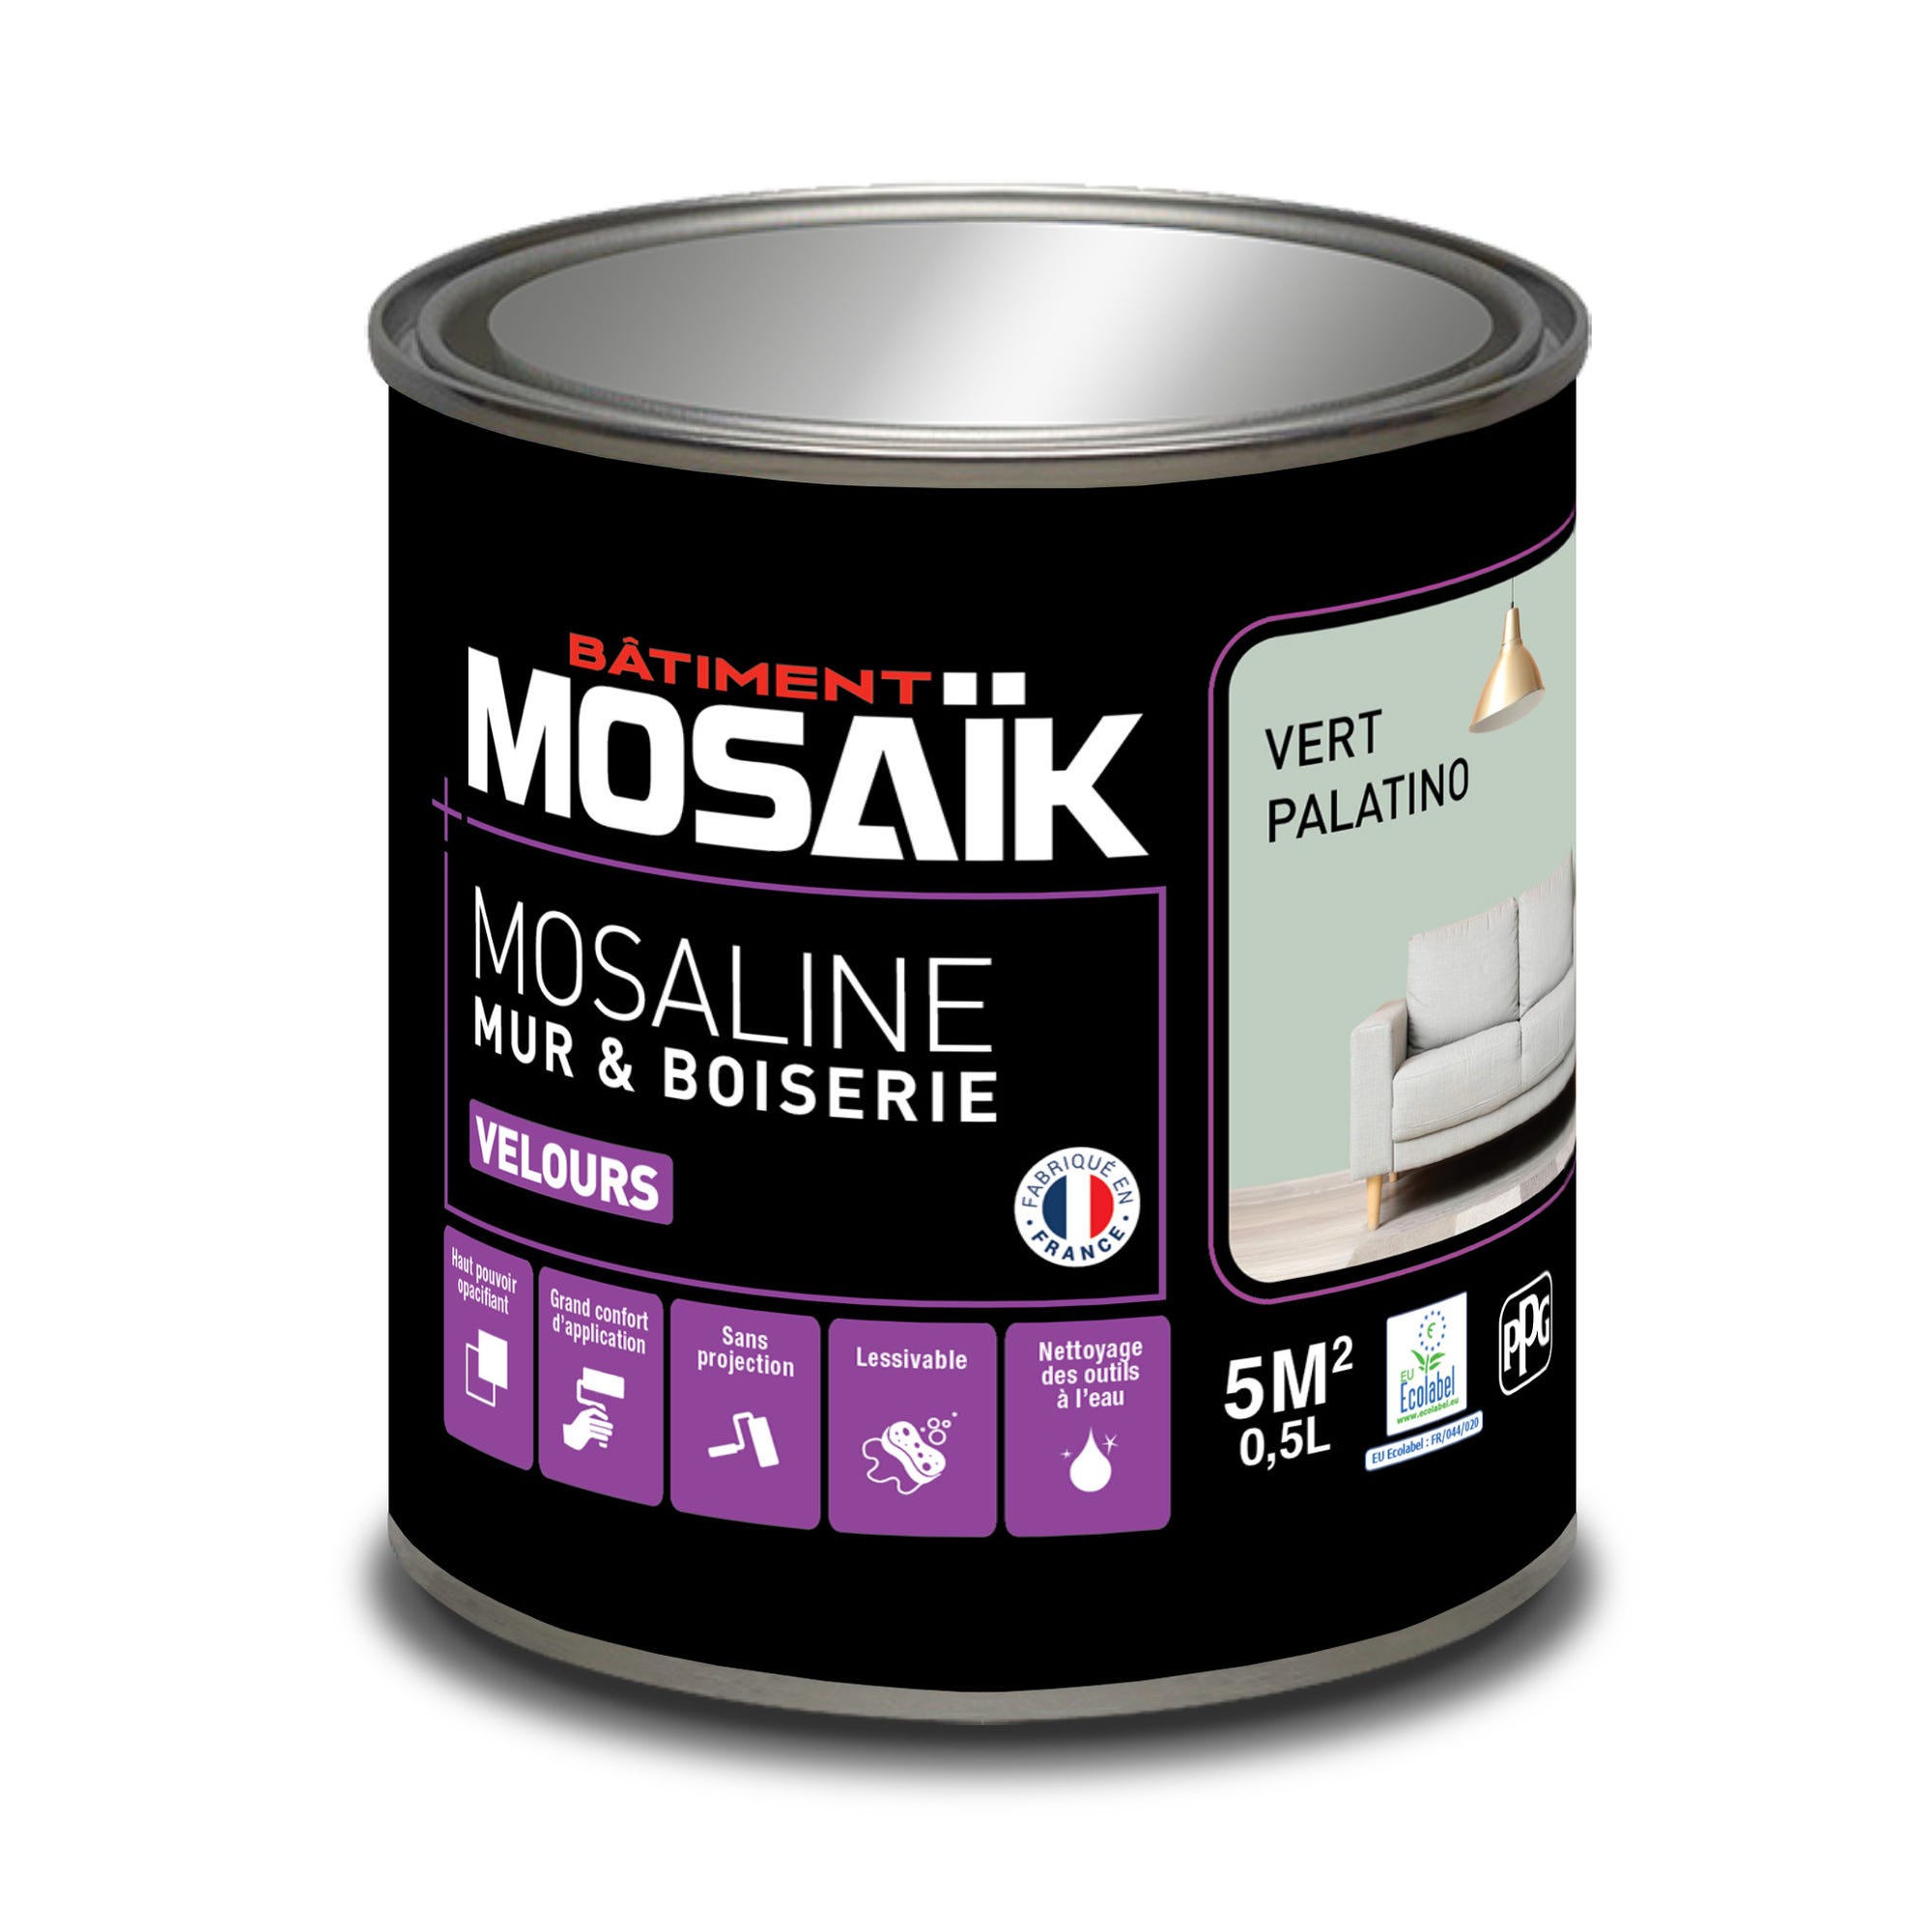 Peinture intérieure multi support acrylique velours vert palatino 0,5 L Mosaline - MOSAIK 2